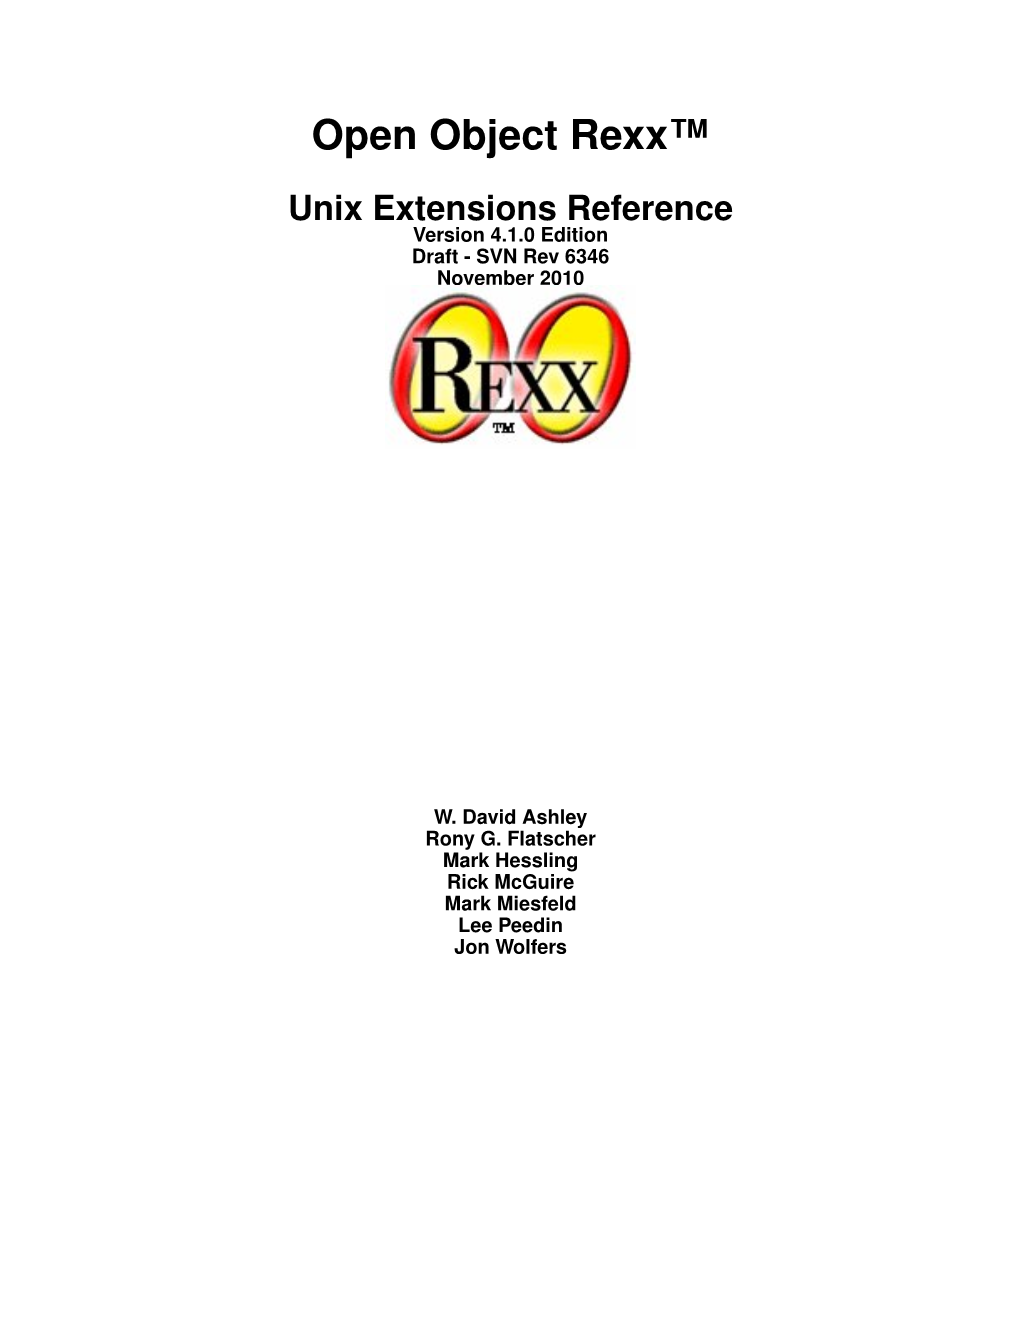 Open Object Rexx: Unix Extensions